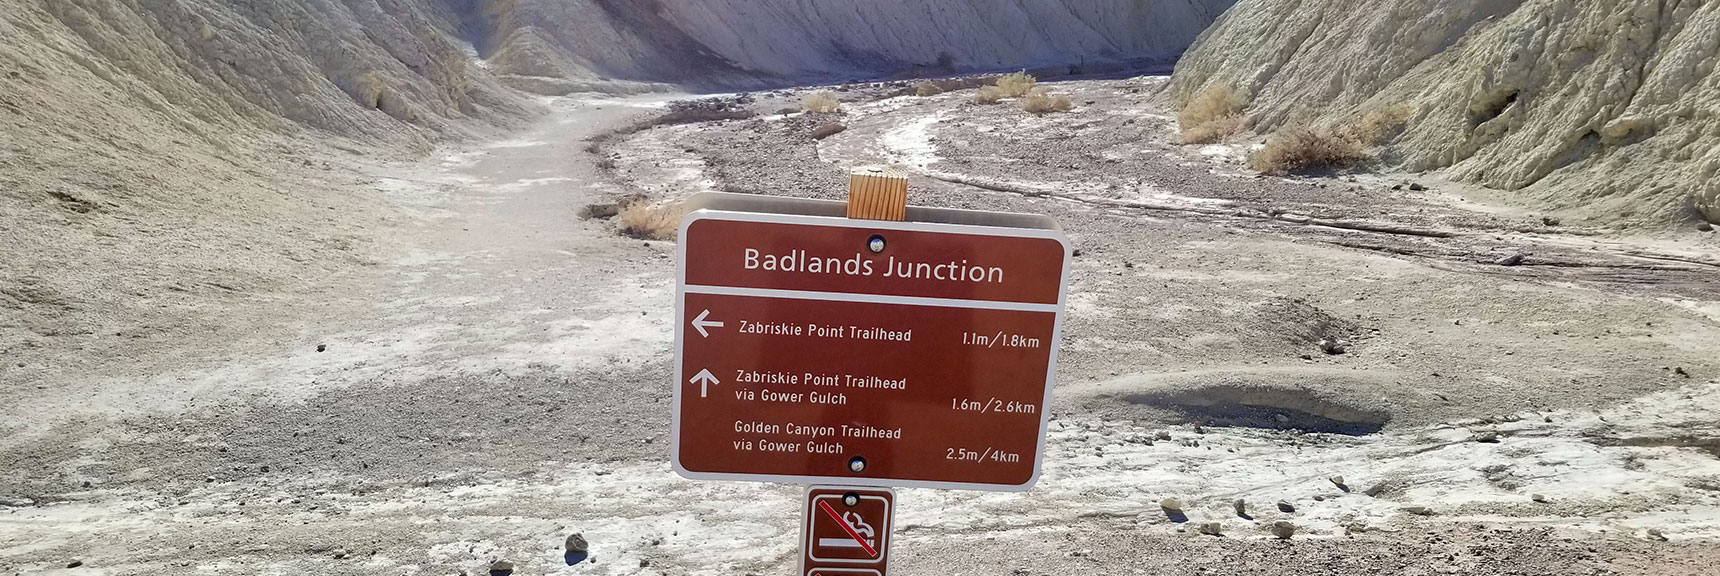 Arrival at Badlands Junction, Heading Toward Zabriskie Point. | Golden Canyon to Zabriskie Point | Death Valley National Park, California